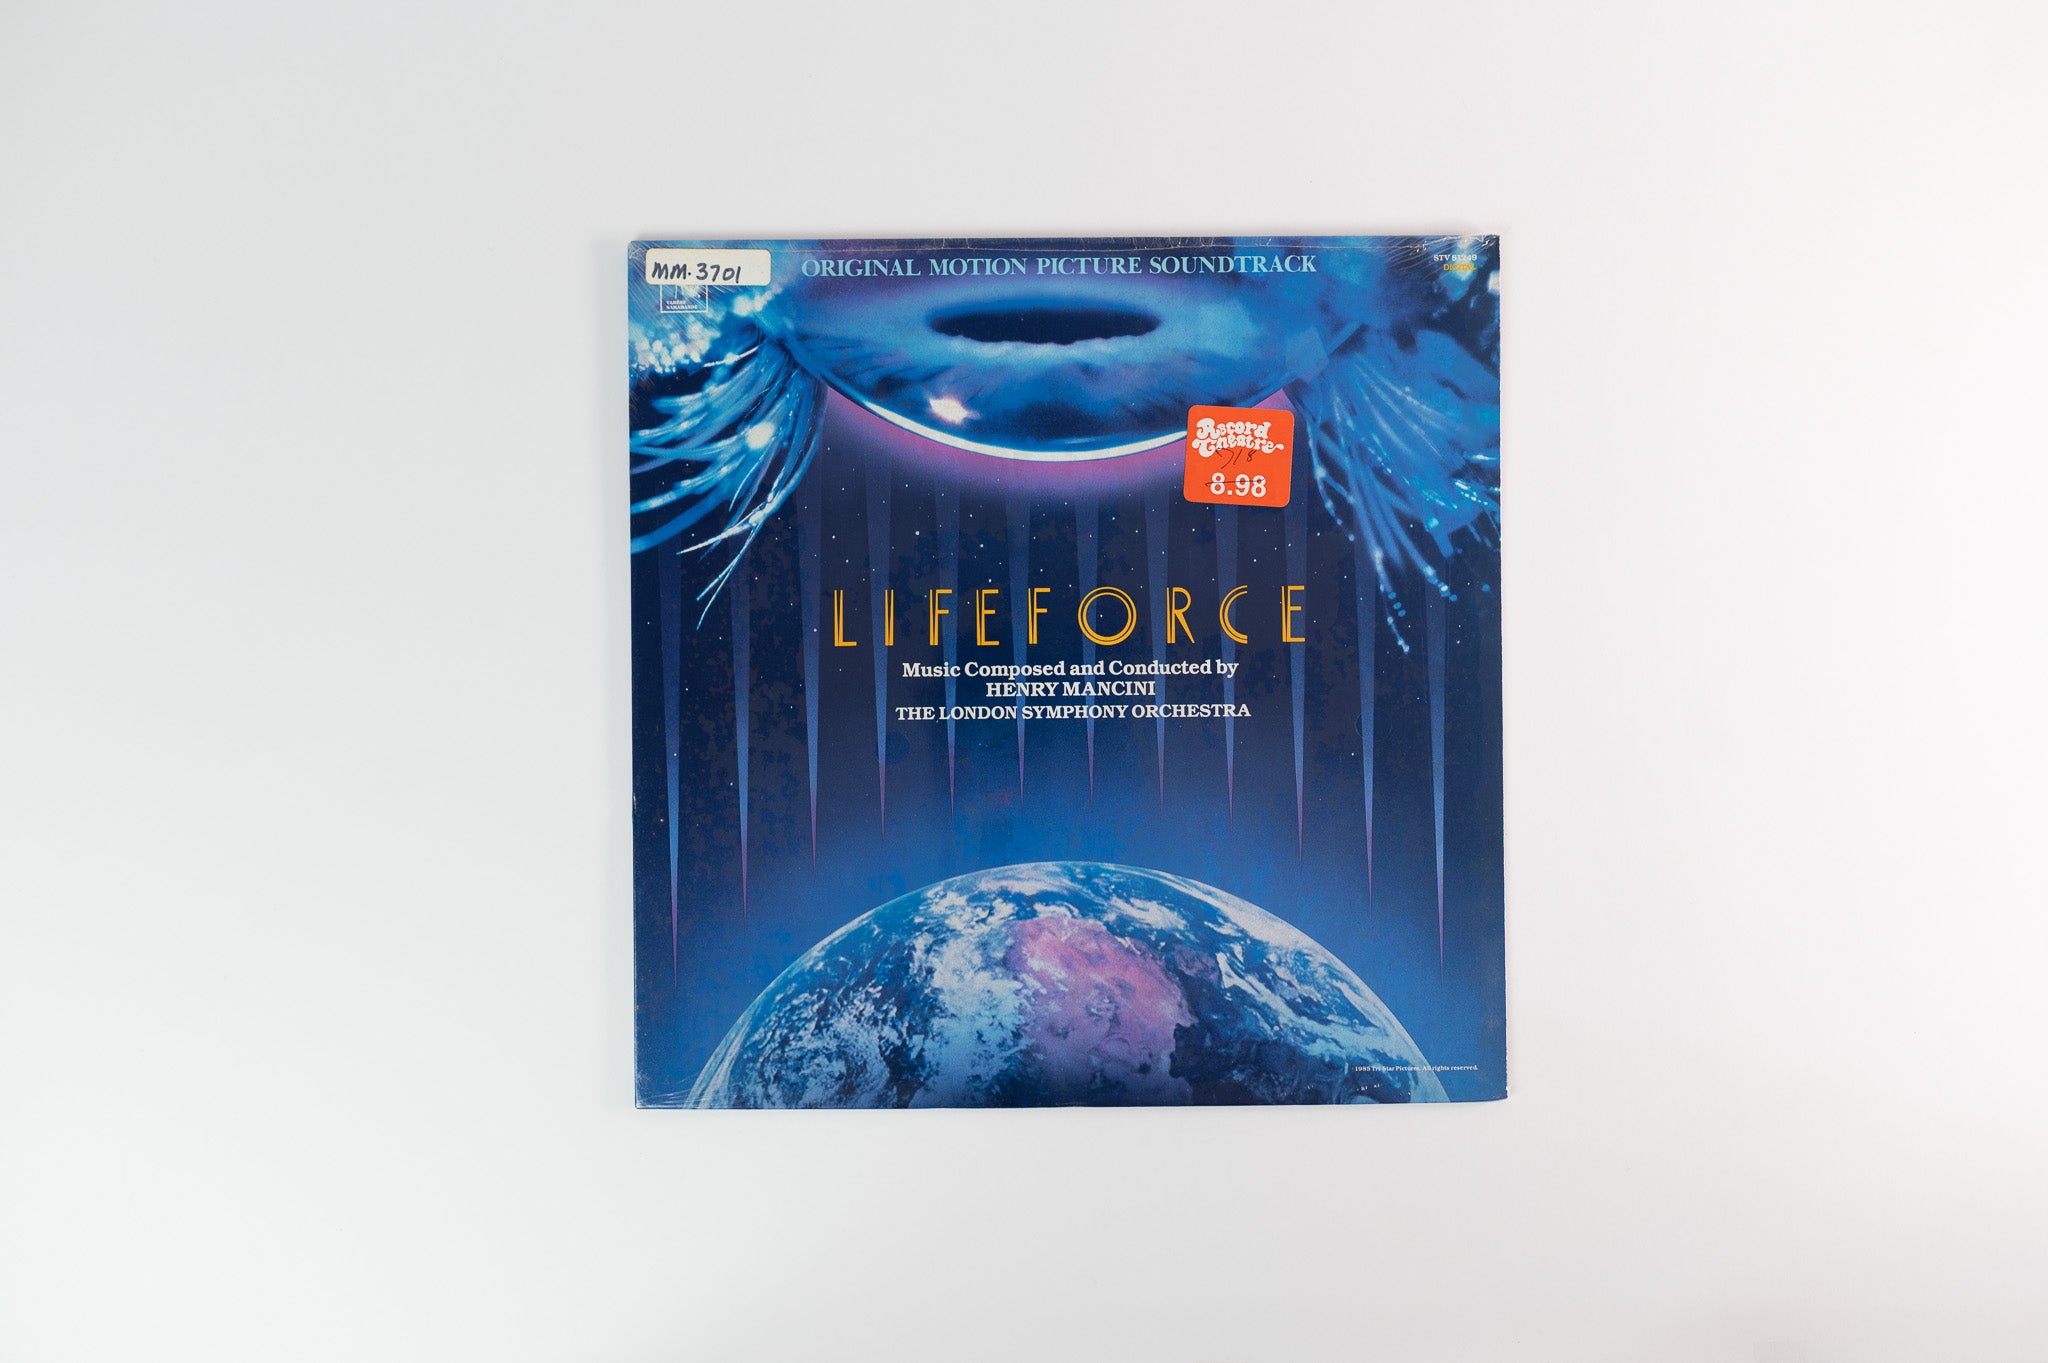 Henry Mancini - Lifeforce (Original Motion Picture Soundtrack) on Varese Sarabande - Sealed